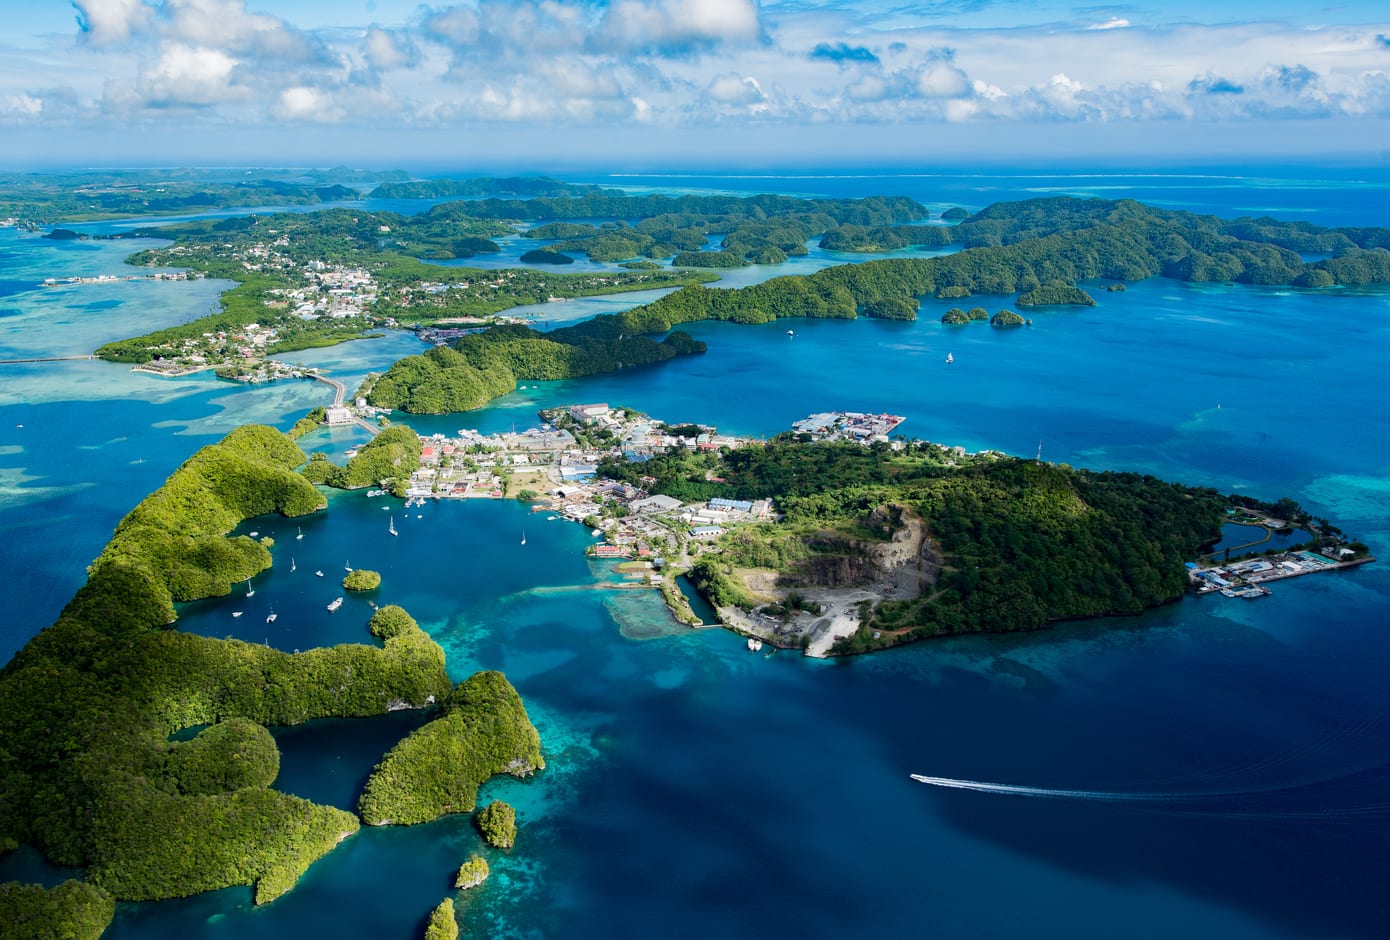 Aerial view of the paradisiac Palau Malakal island, in Oceania.